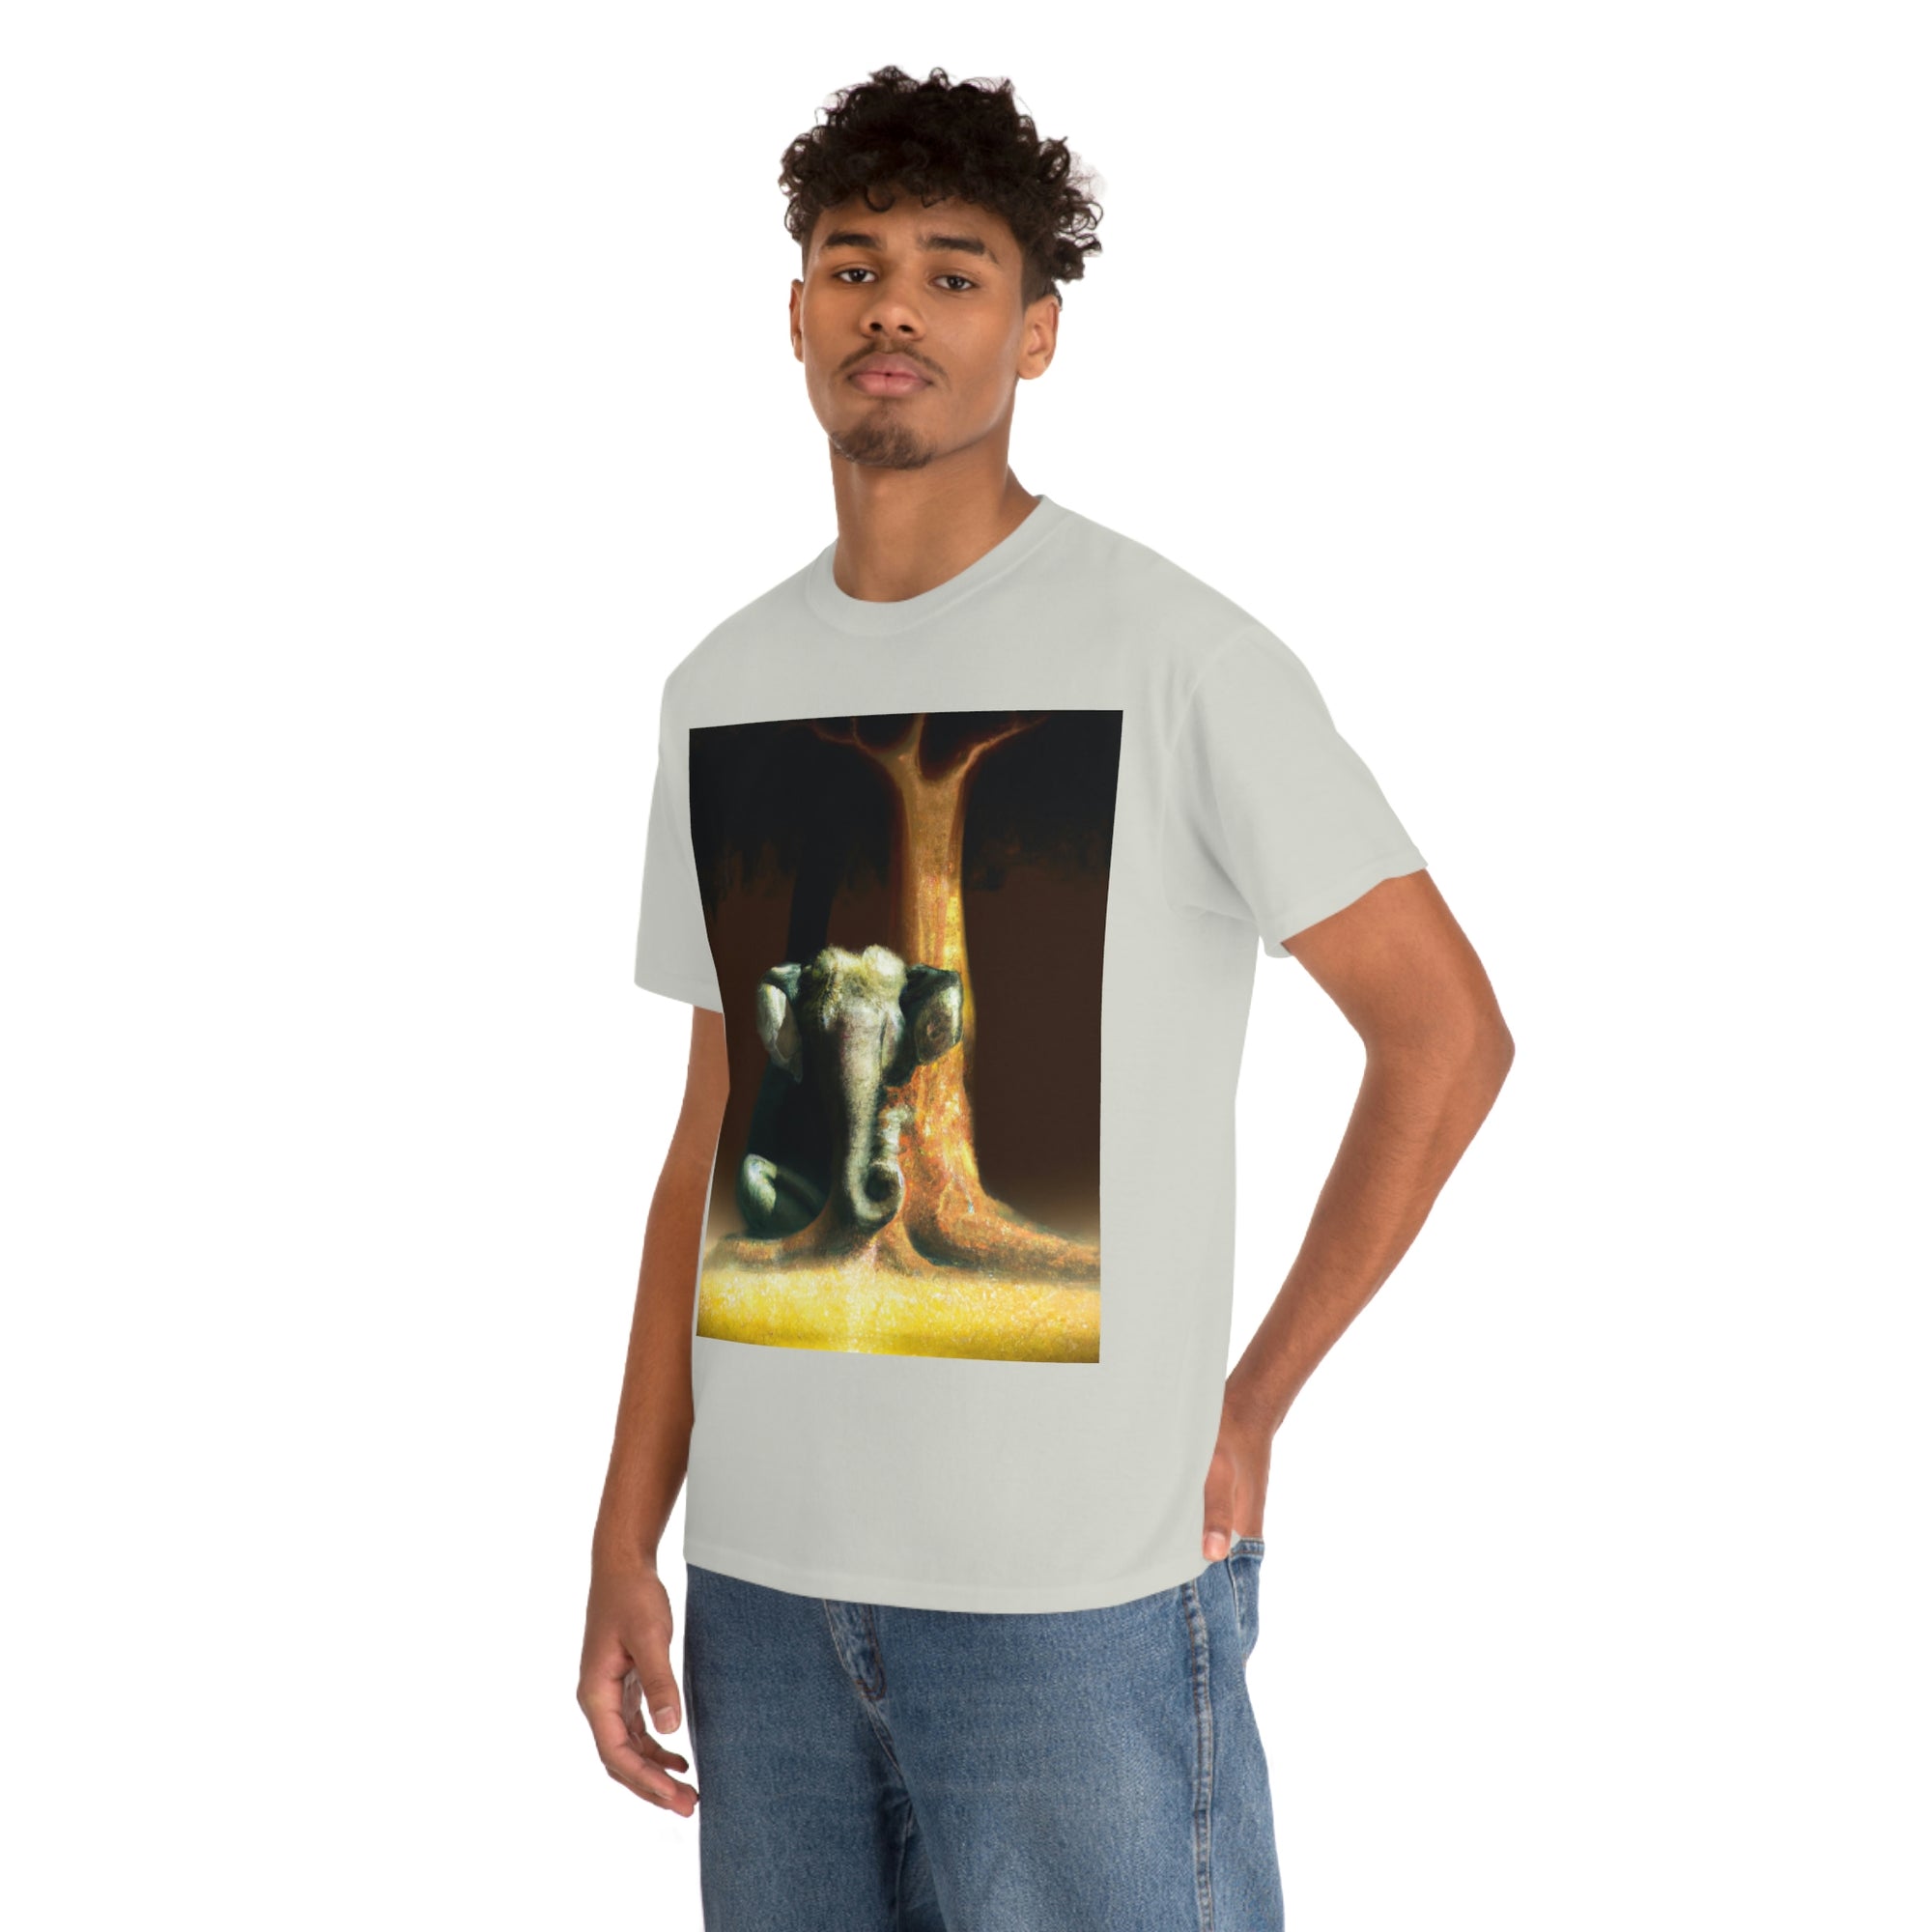 "Enlightened" Elephant - Unisex T-shirt